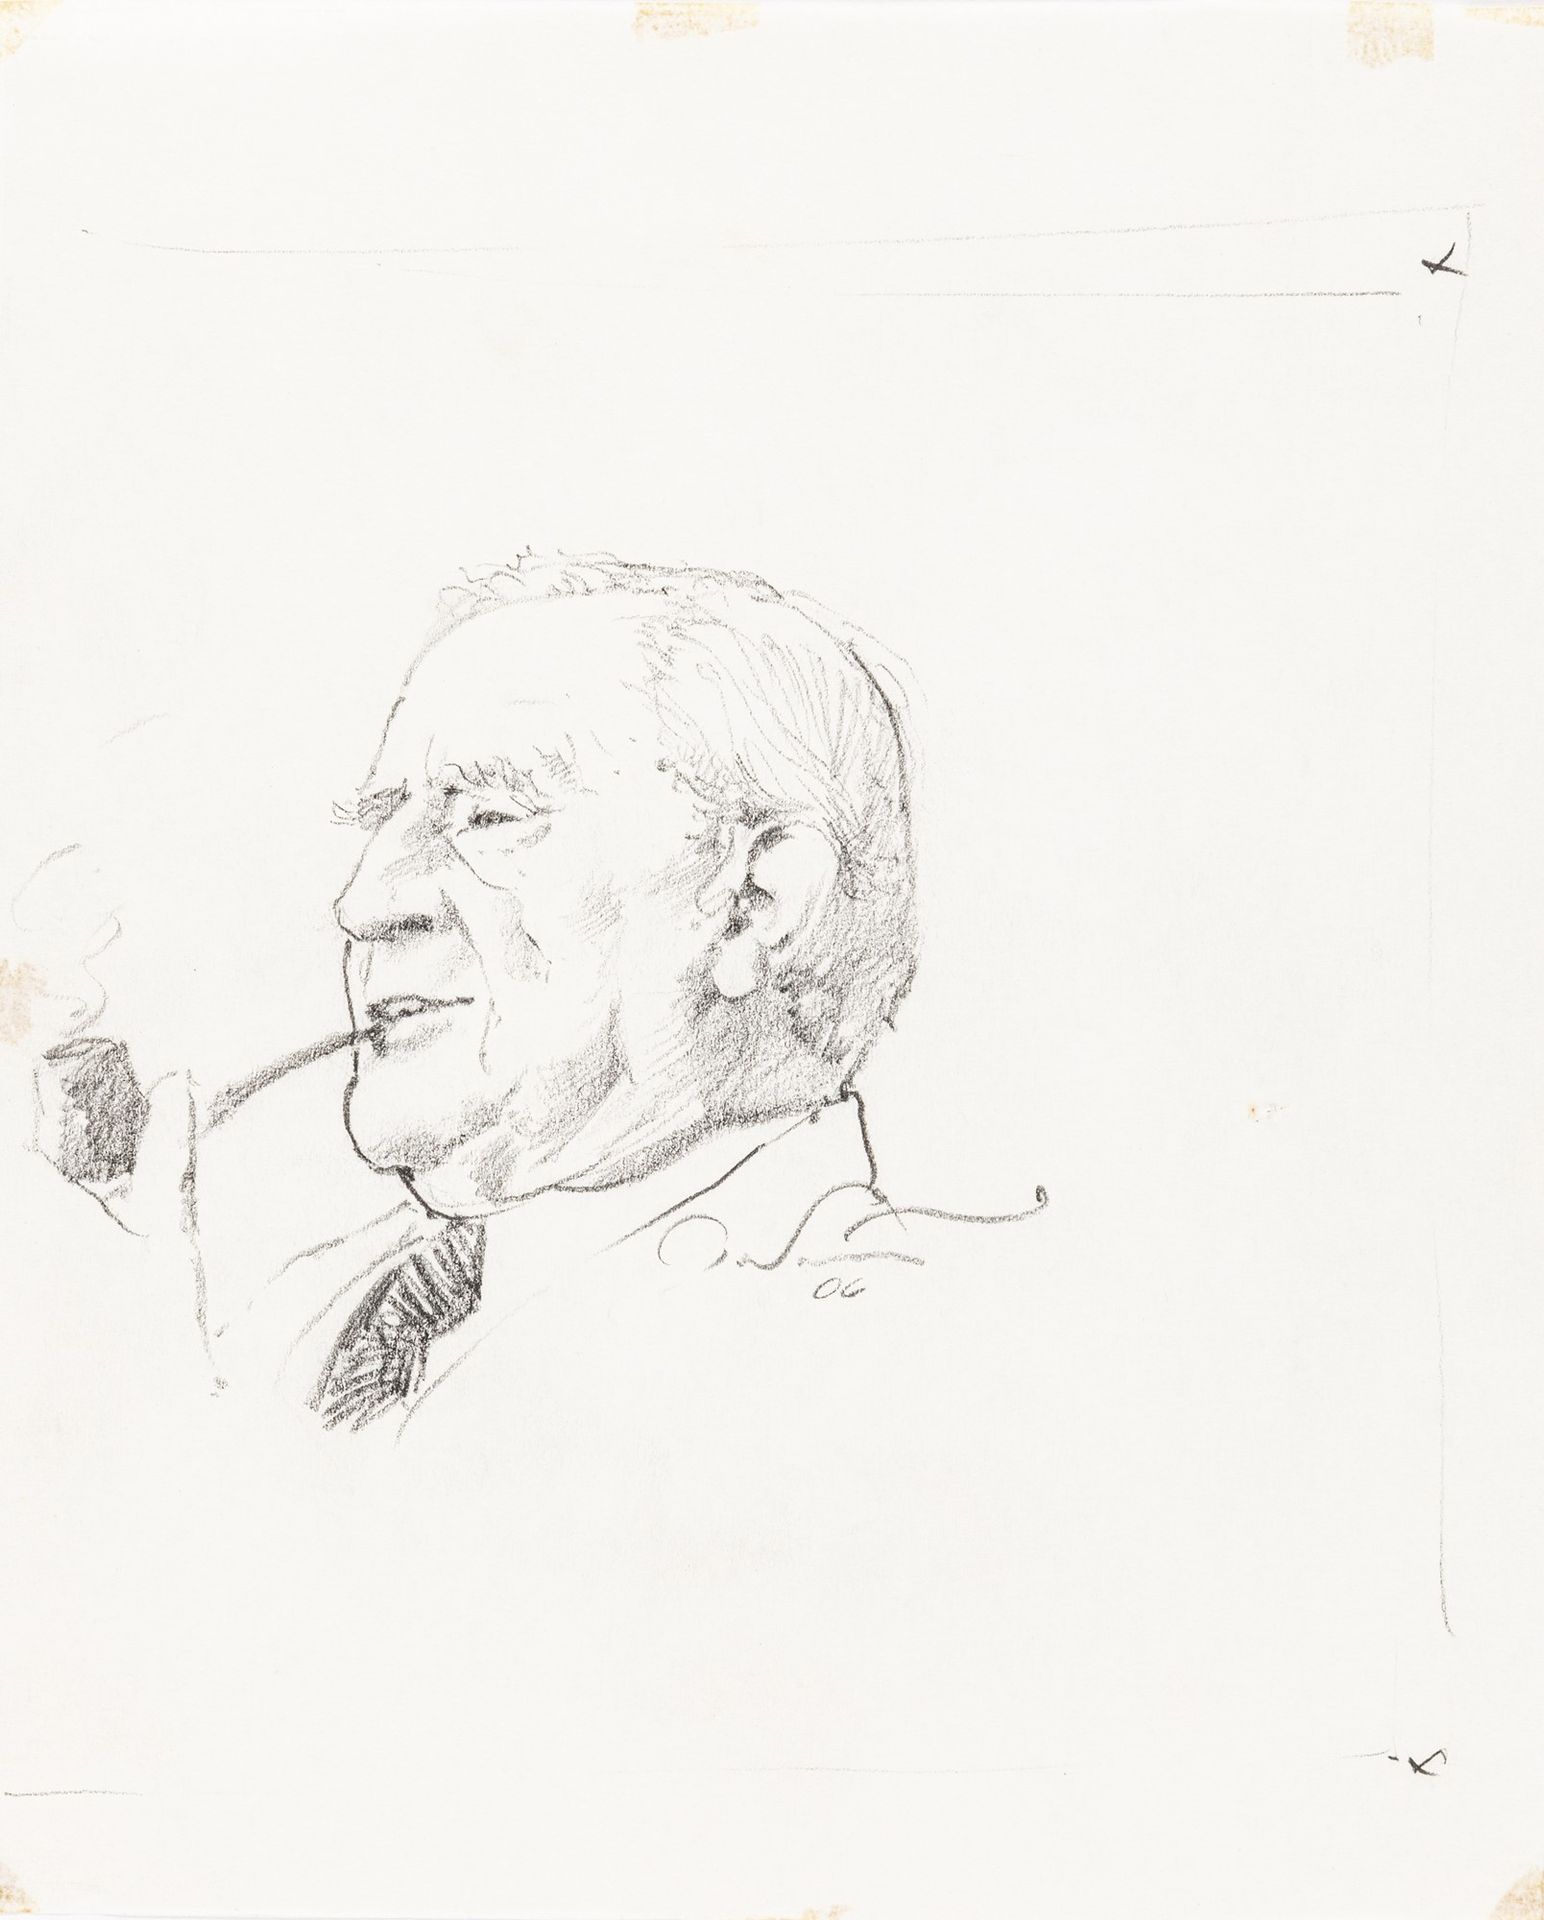 Ted Nasmith J.R.R. Tolkien, 2006

pencil on paper
25.5 x 31 cm
Original drawing &hellip;